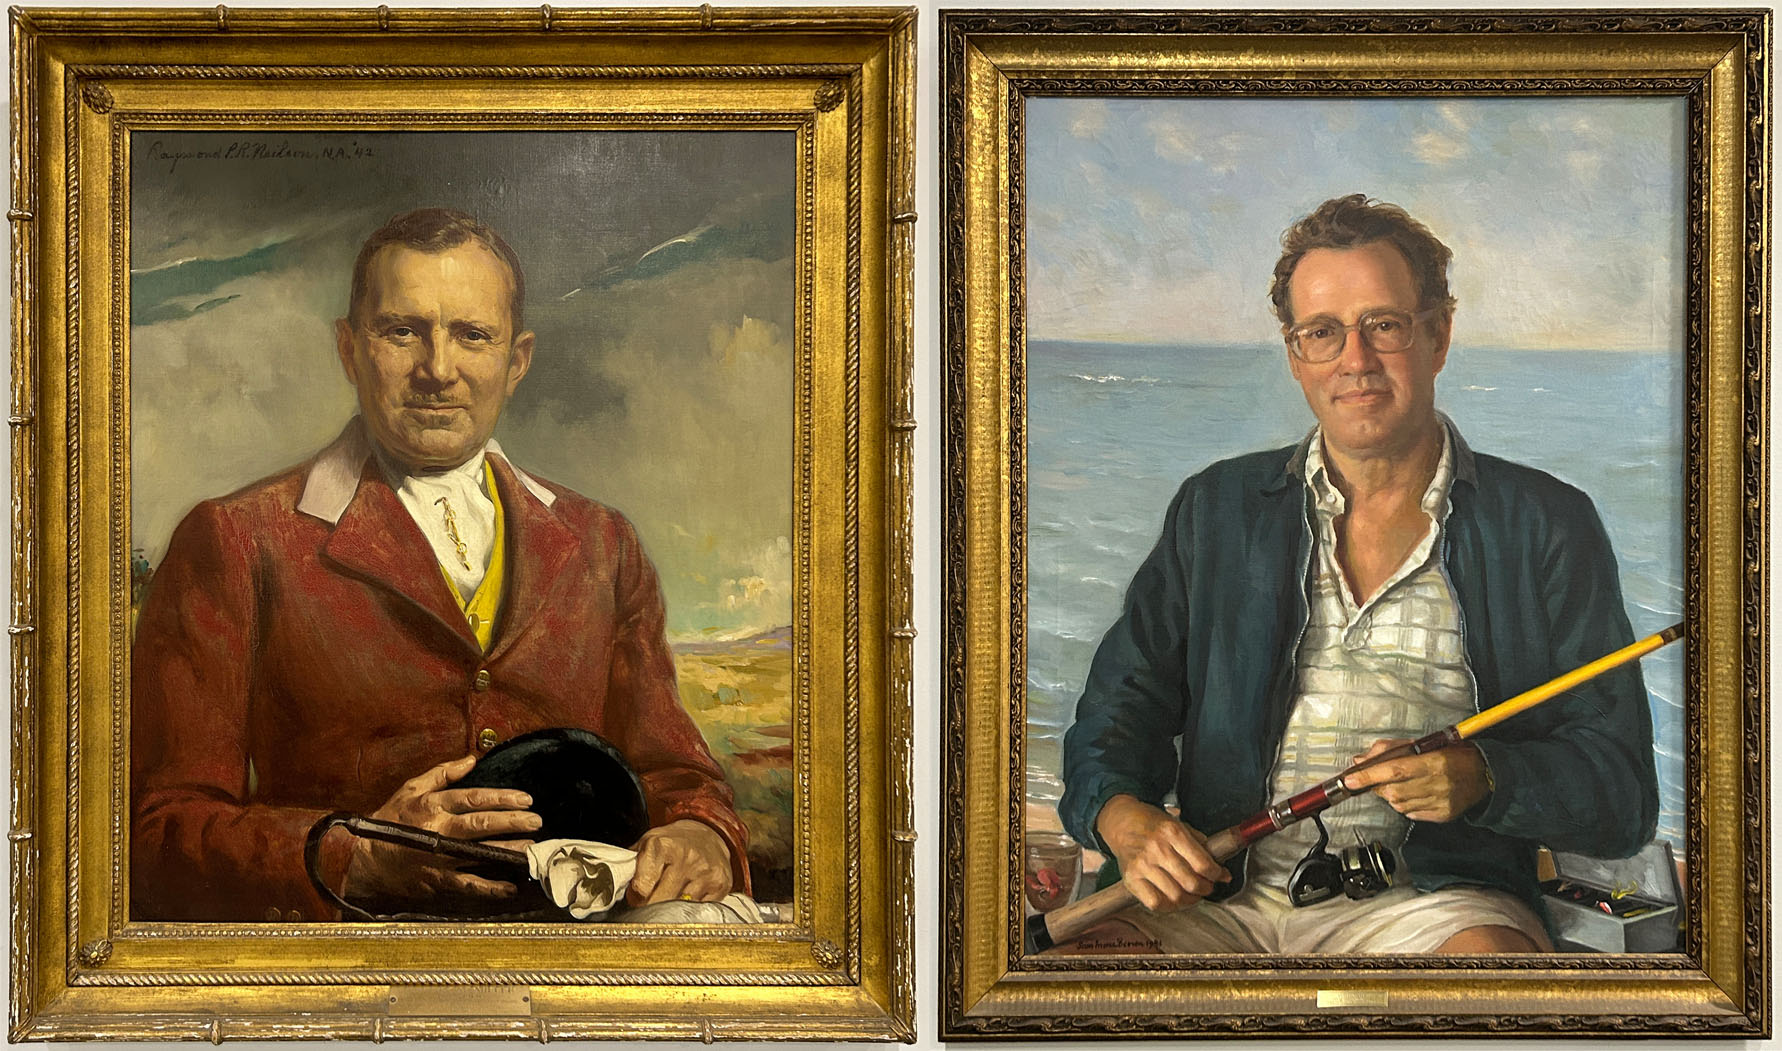 Miller portraits